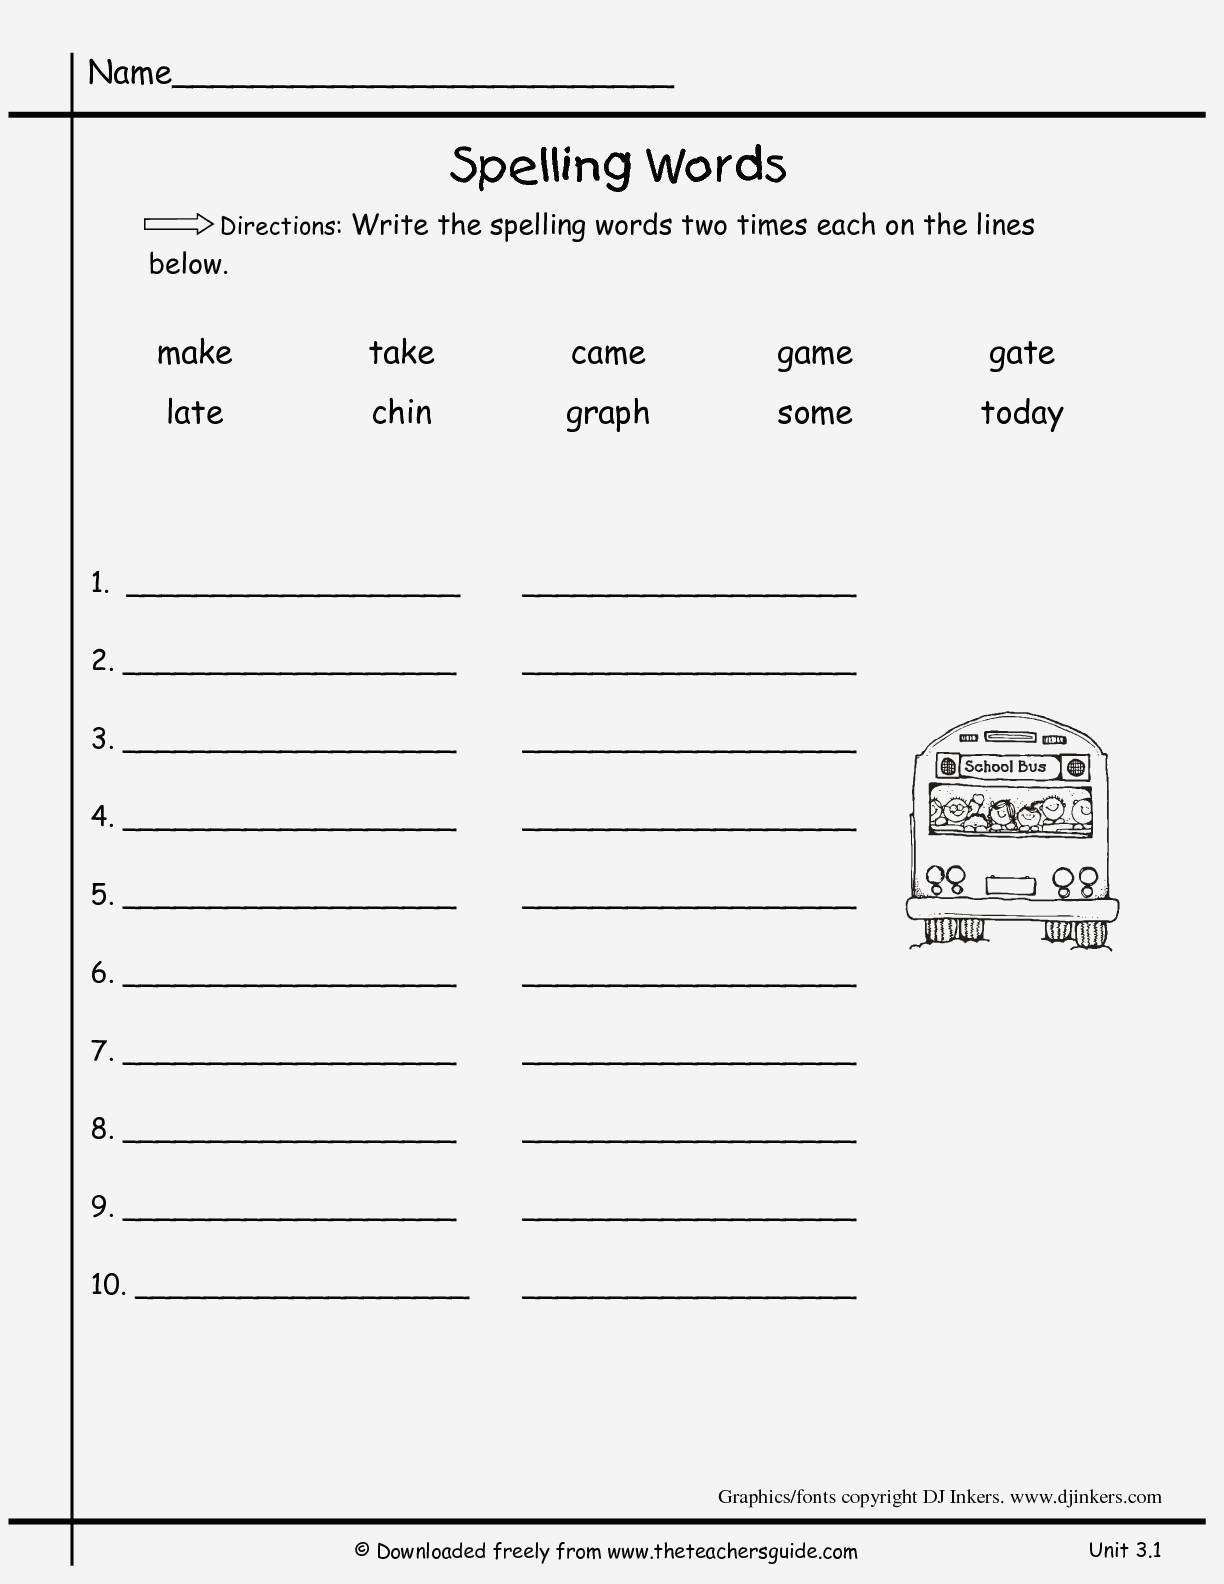 Inspirational 3 Times Each Worksheet – Enterjapan Or Free First Grade Spelling Worksheets